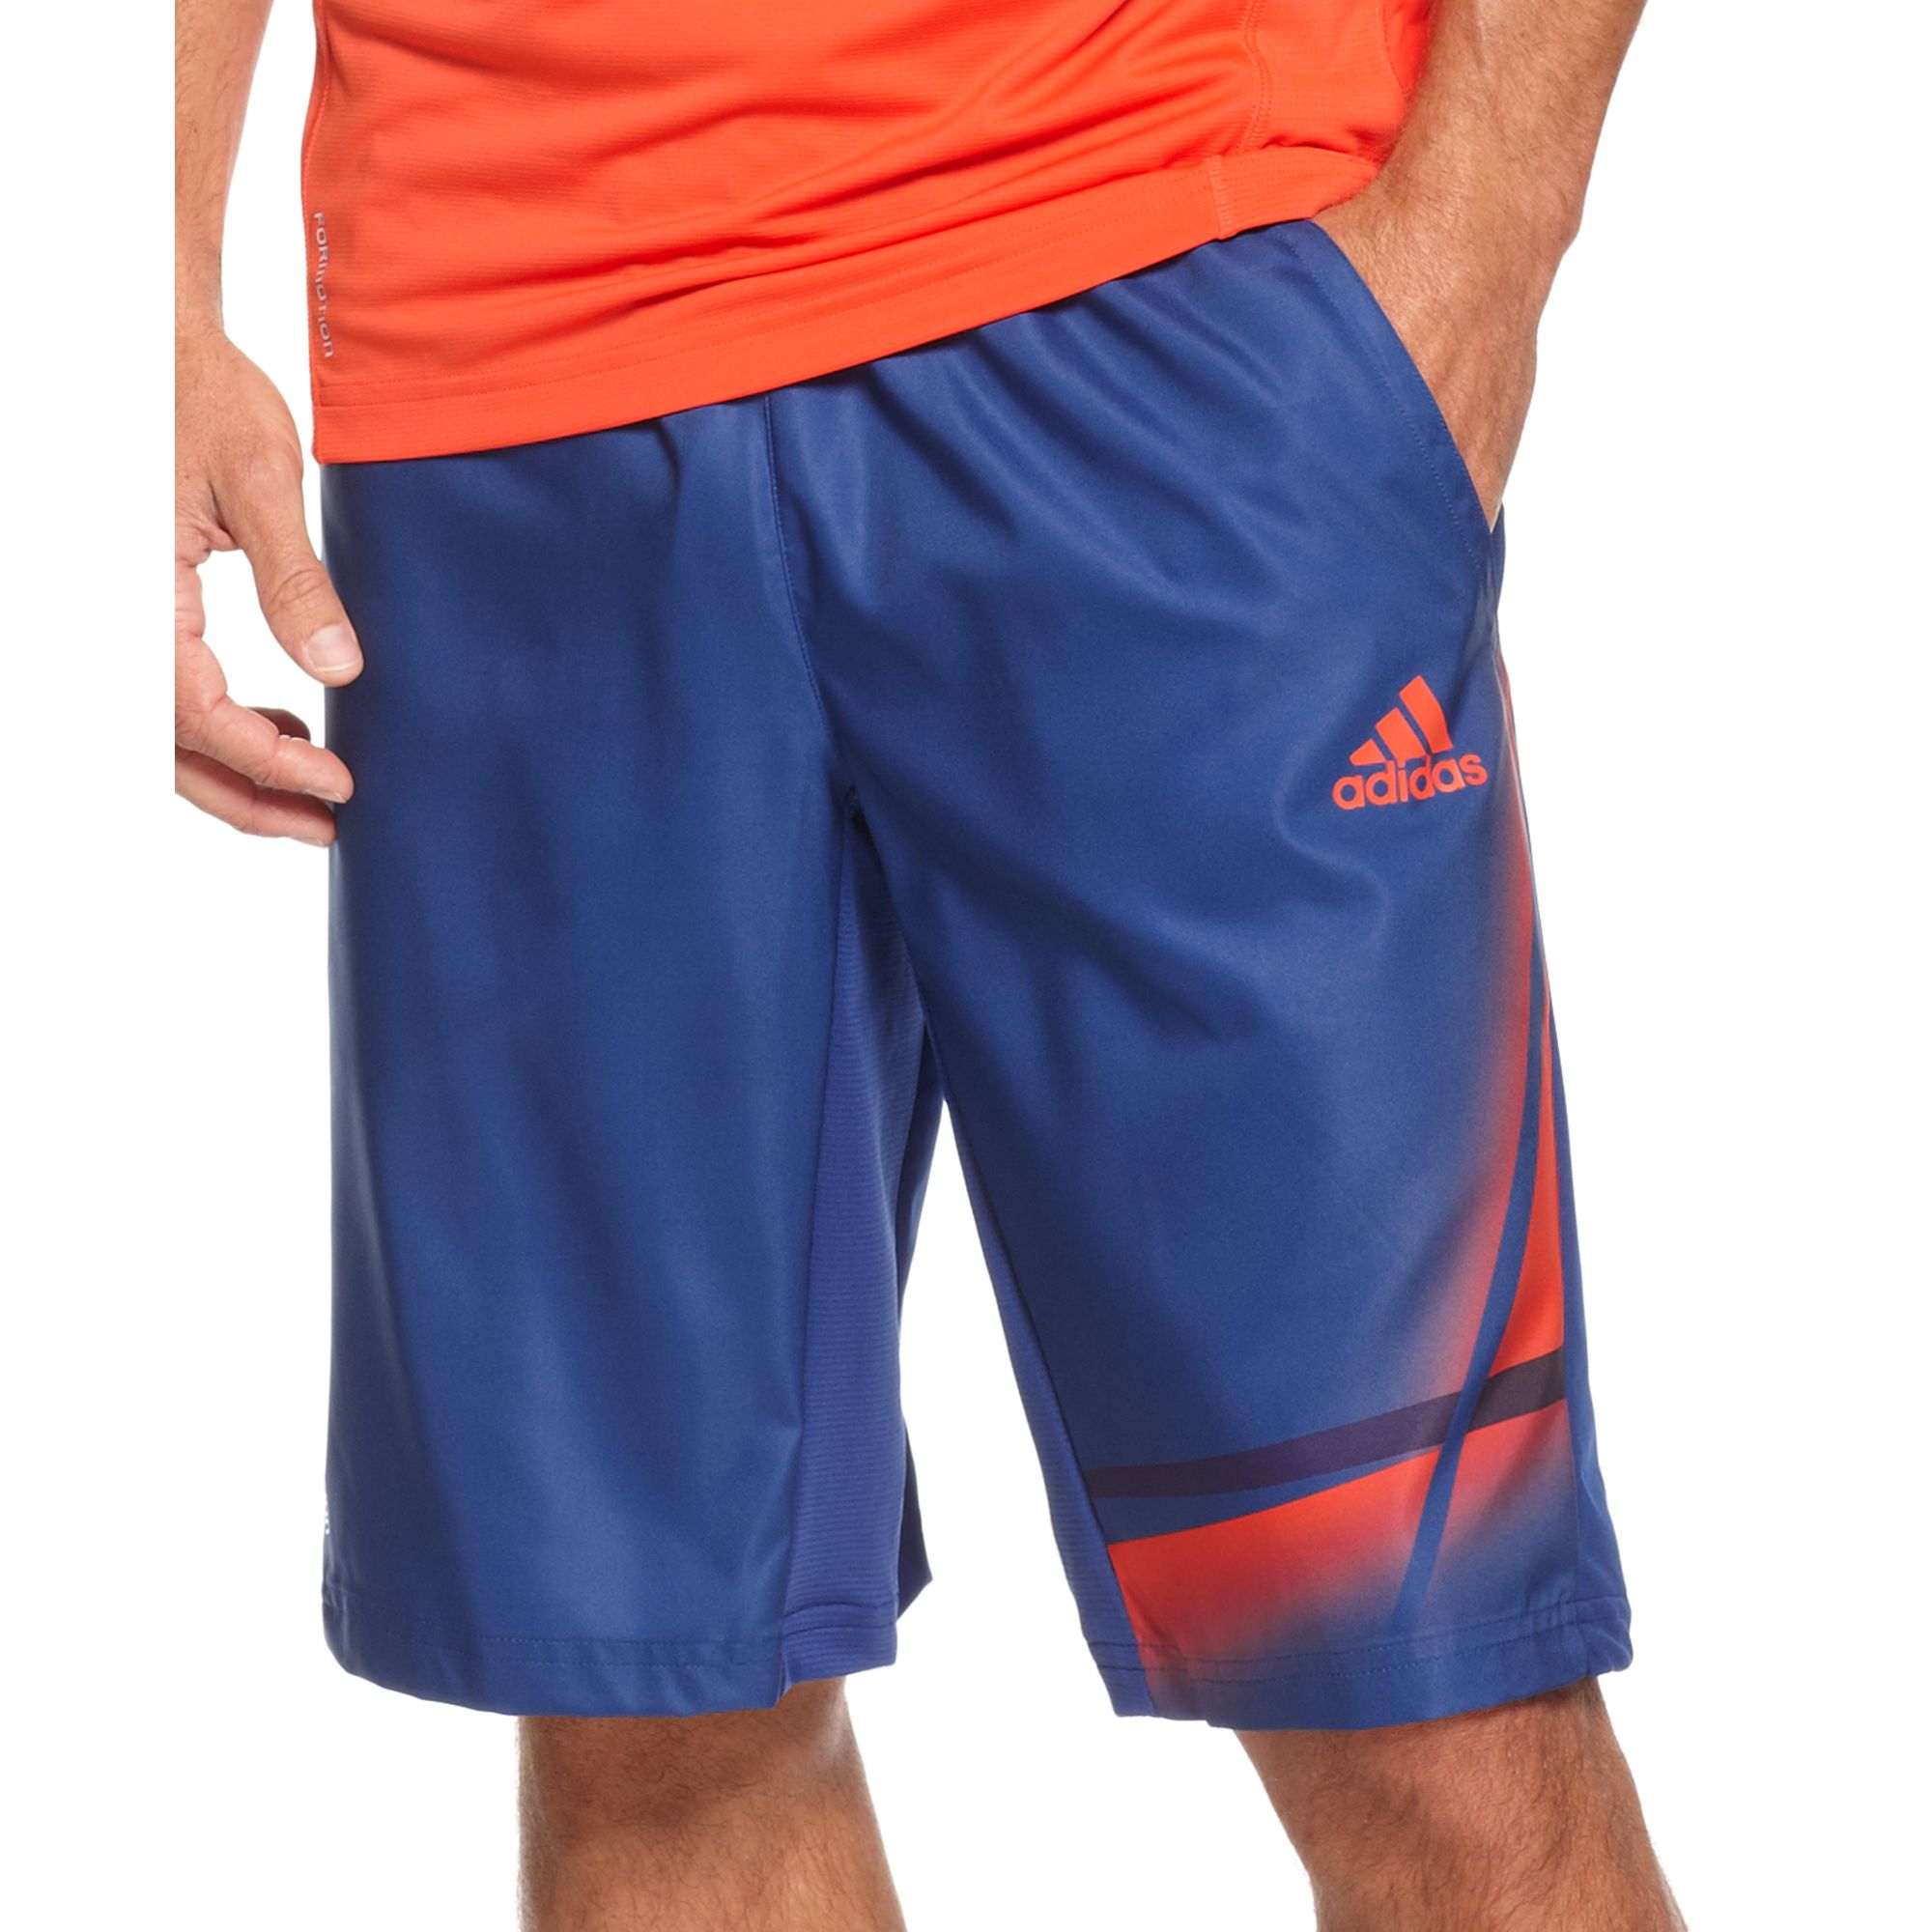 Lyst - Adidas Adizero Bermuda Tennis Shorts in Blue for Men